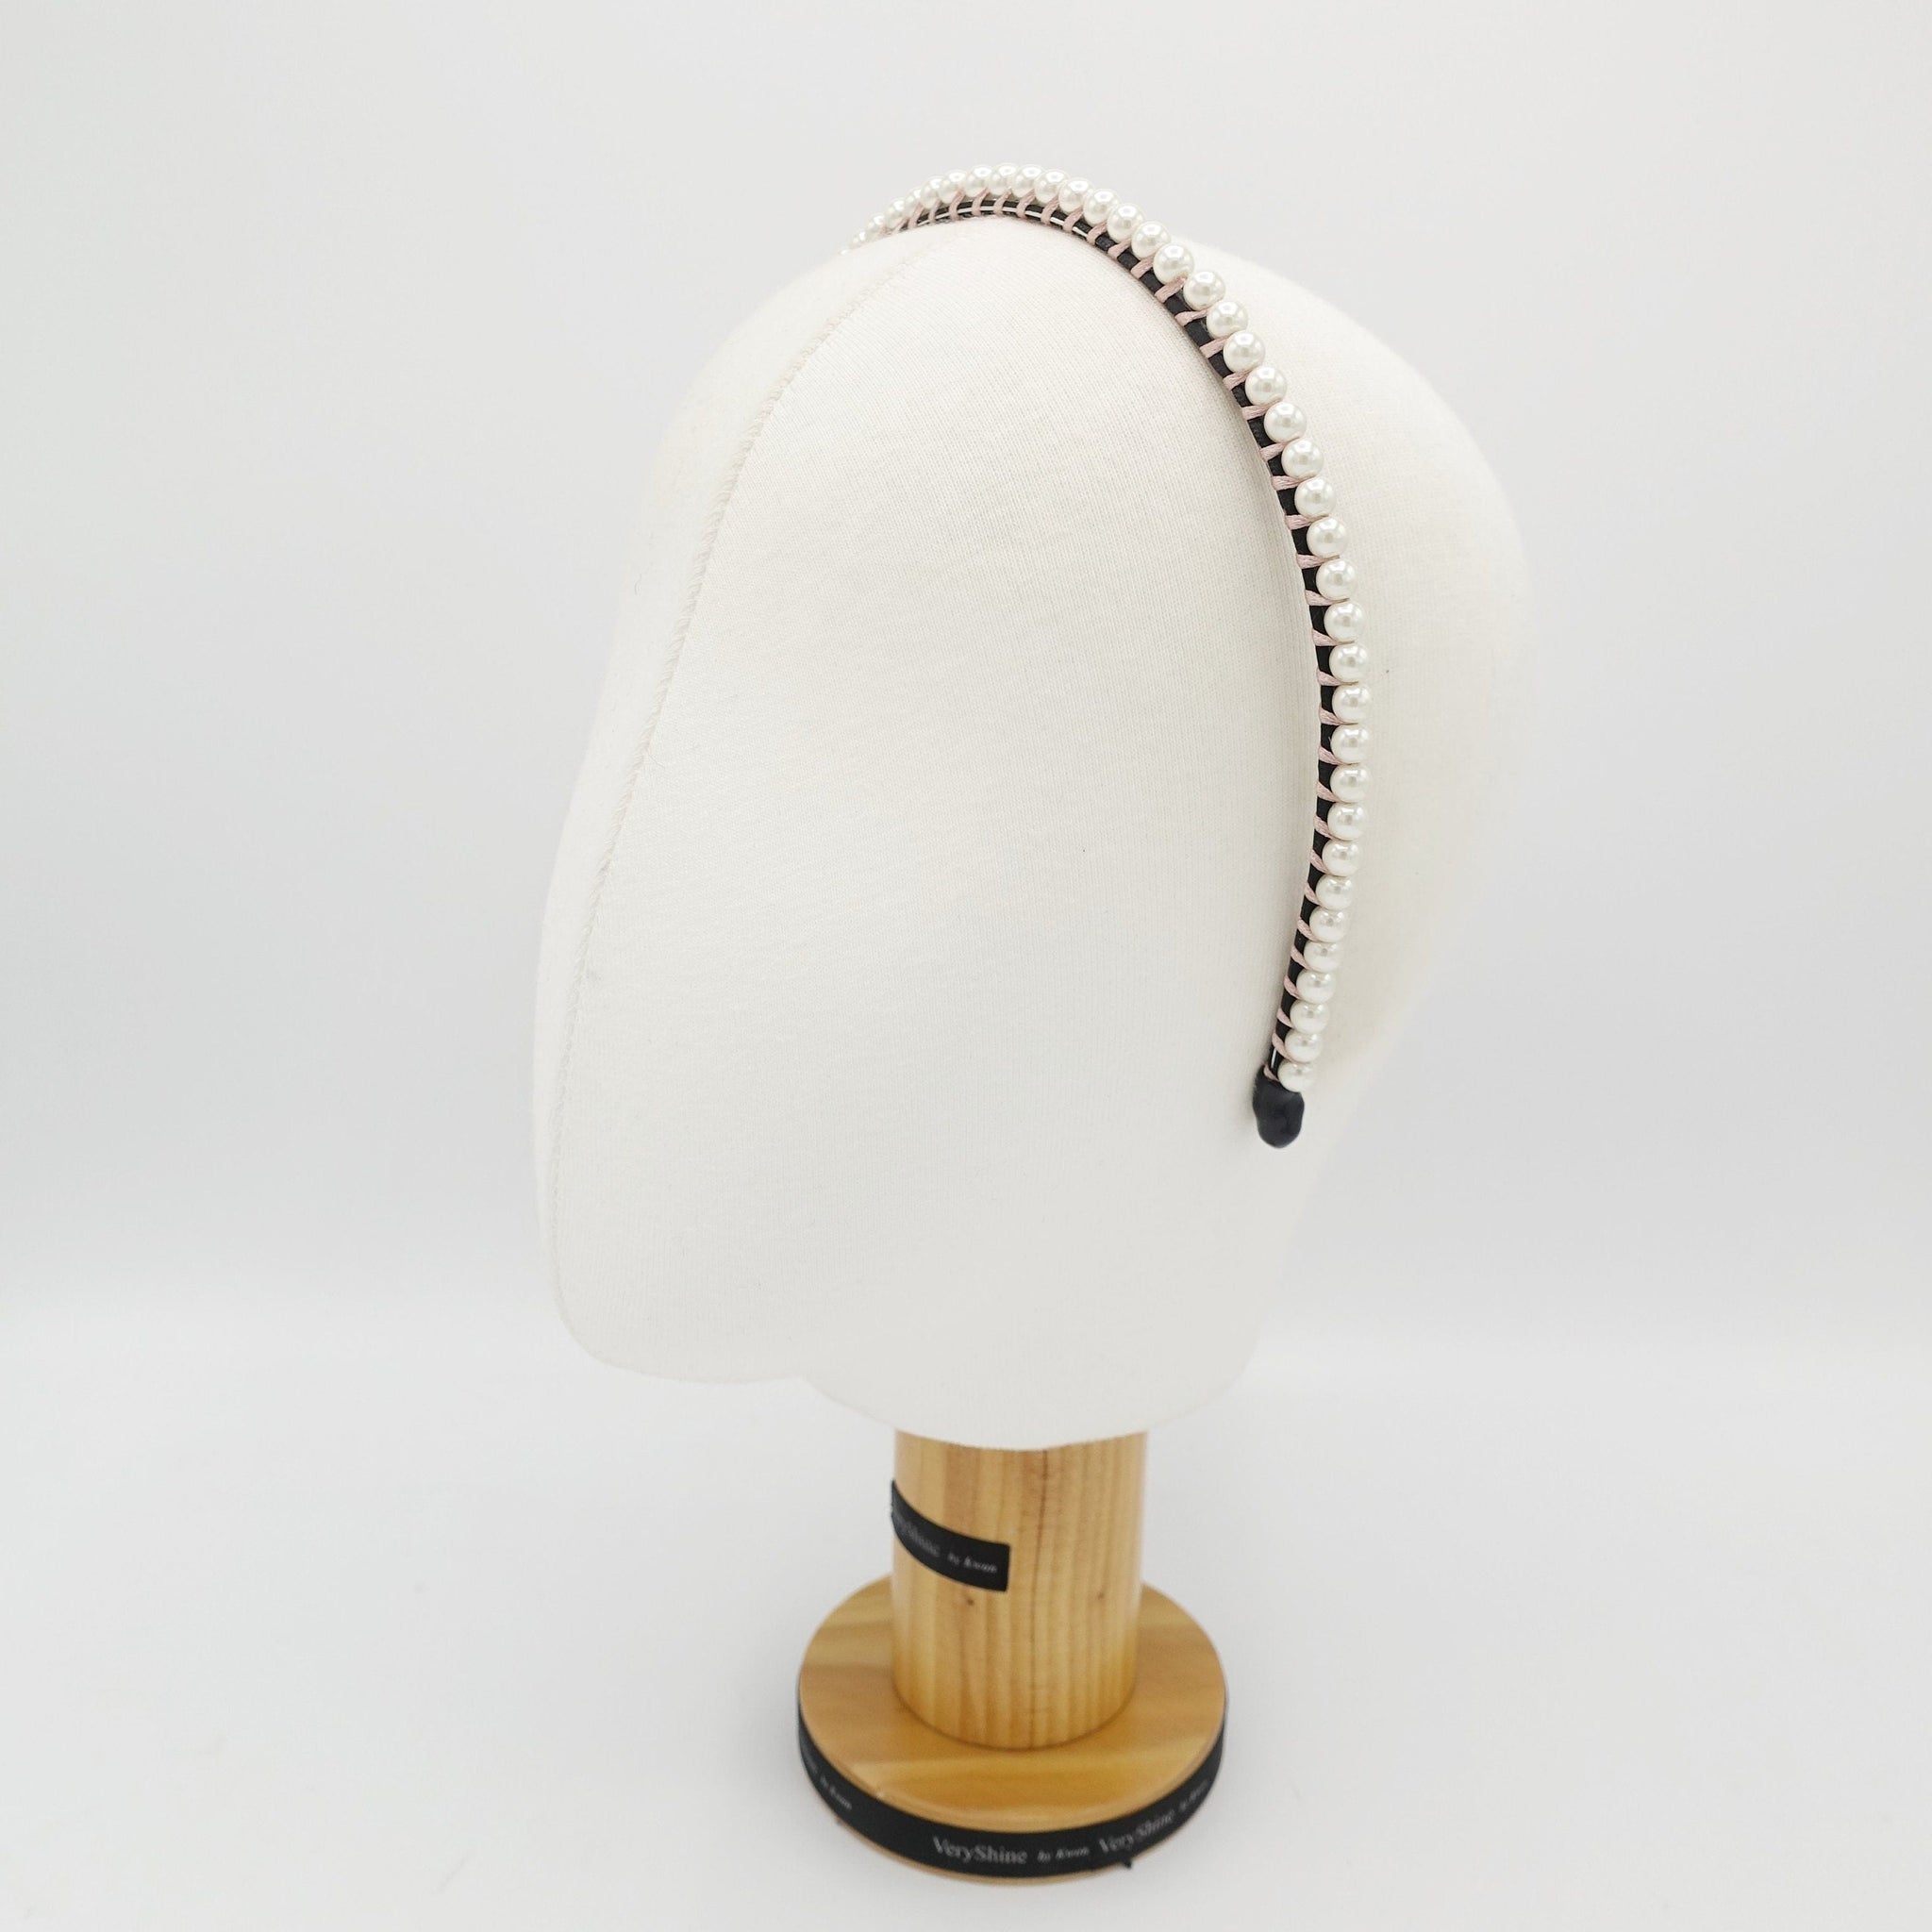 veryshine.com Headband pearl embellished headband simple one row thread wrap hairband